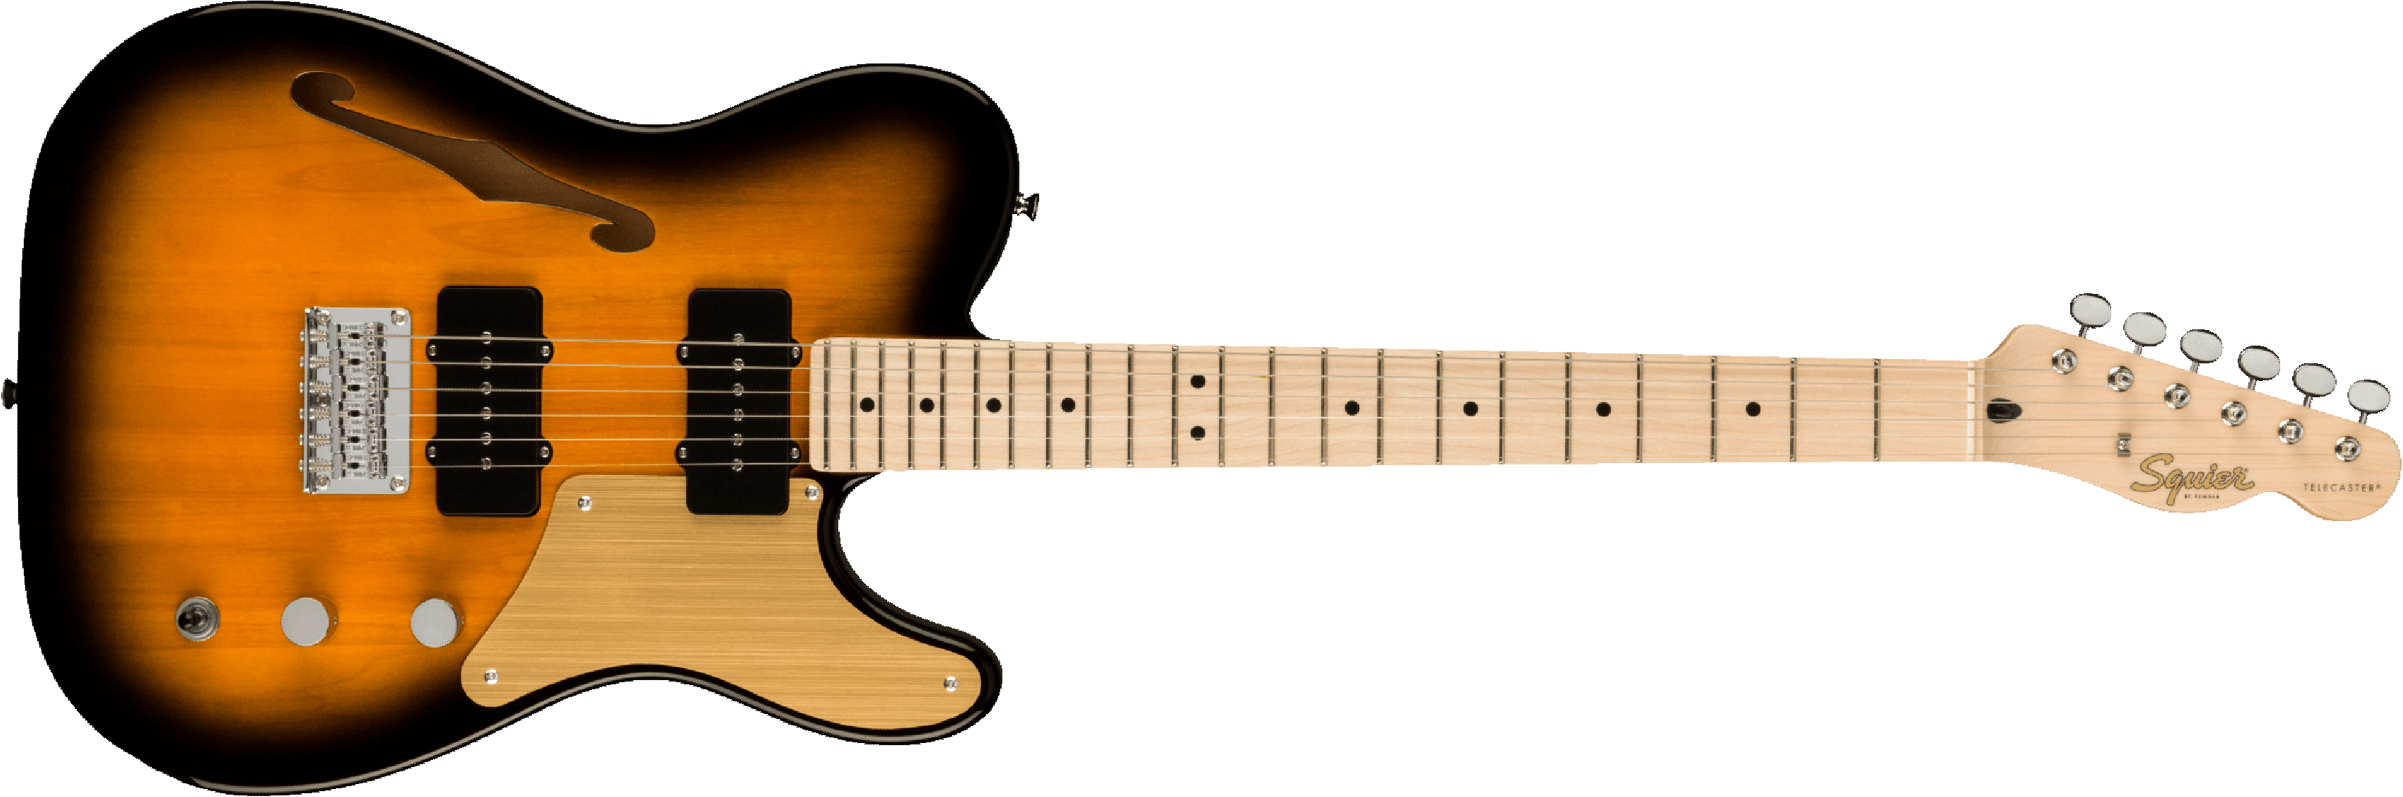 Squier Tele Thinline Cabronita Paranormal Ss Ht Mn - 2 Tone Sunburst - Tel shape electric guitar - Main picture